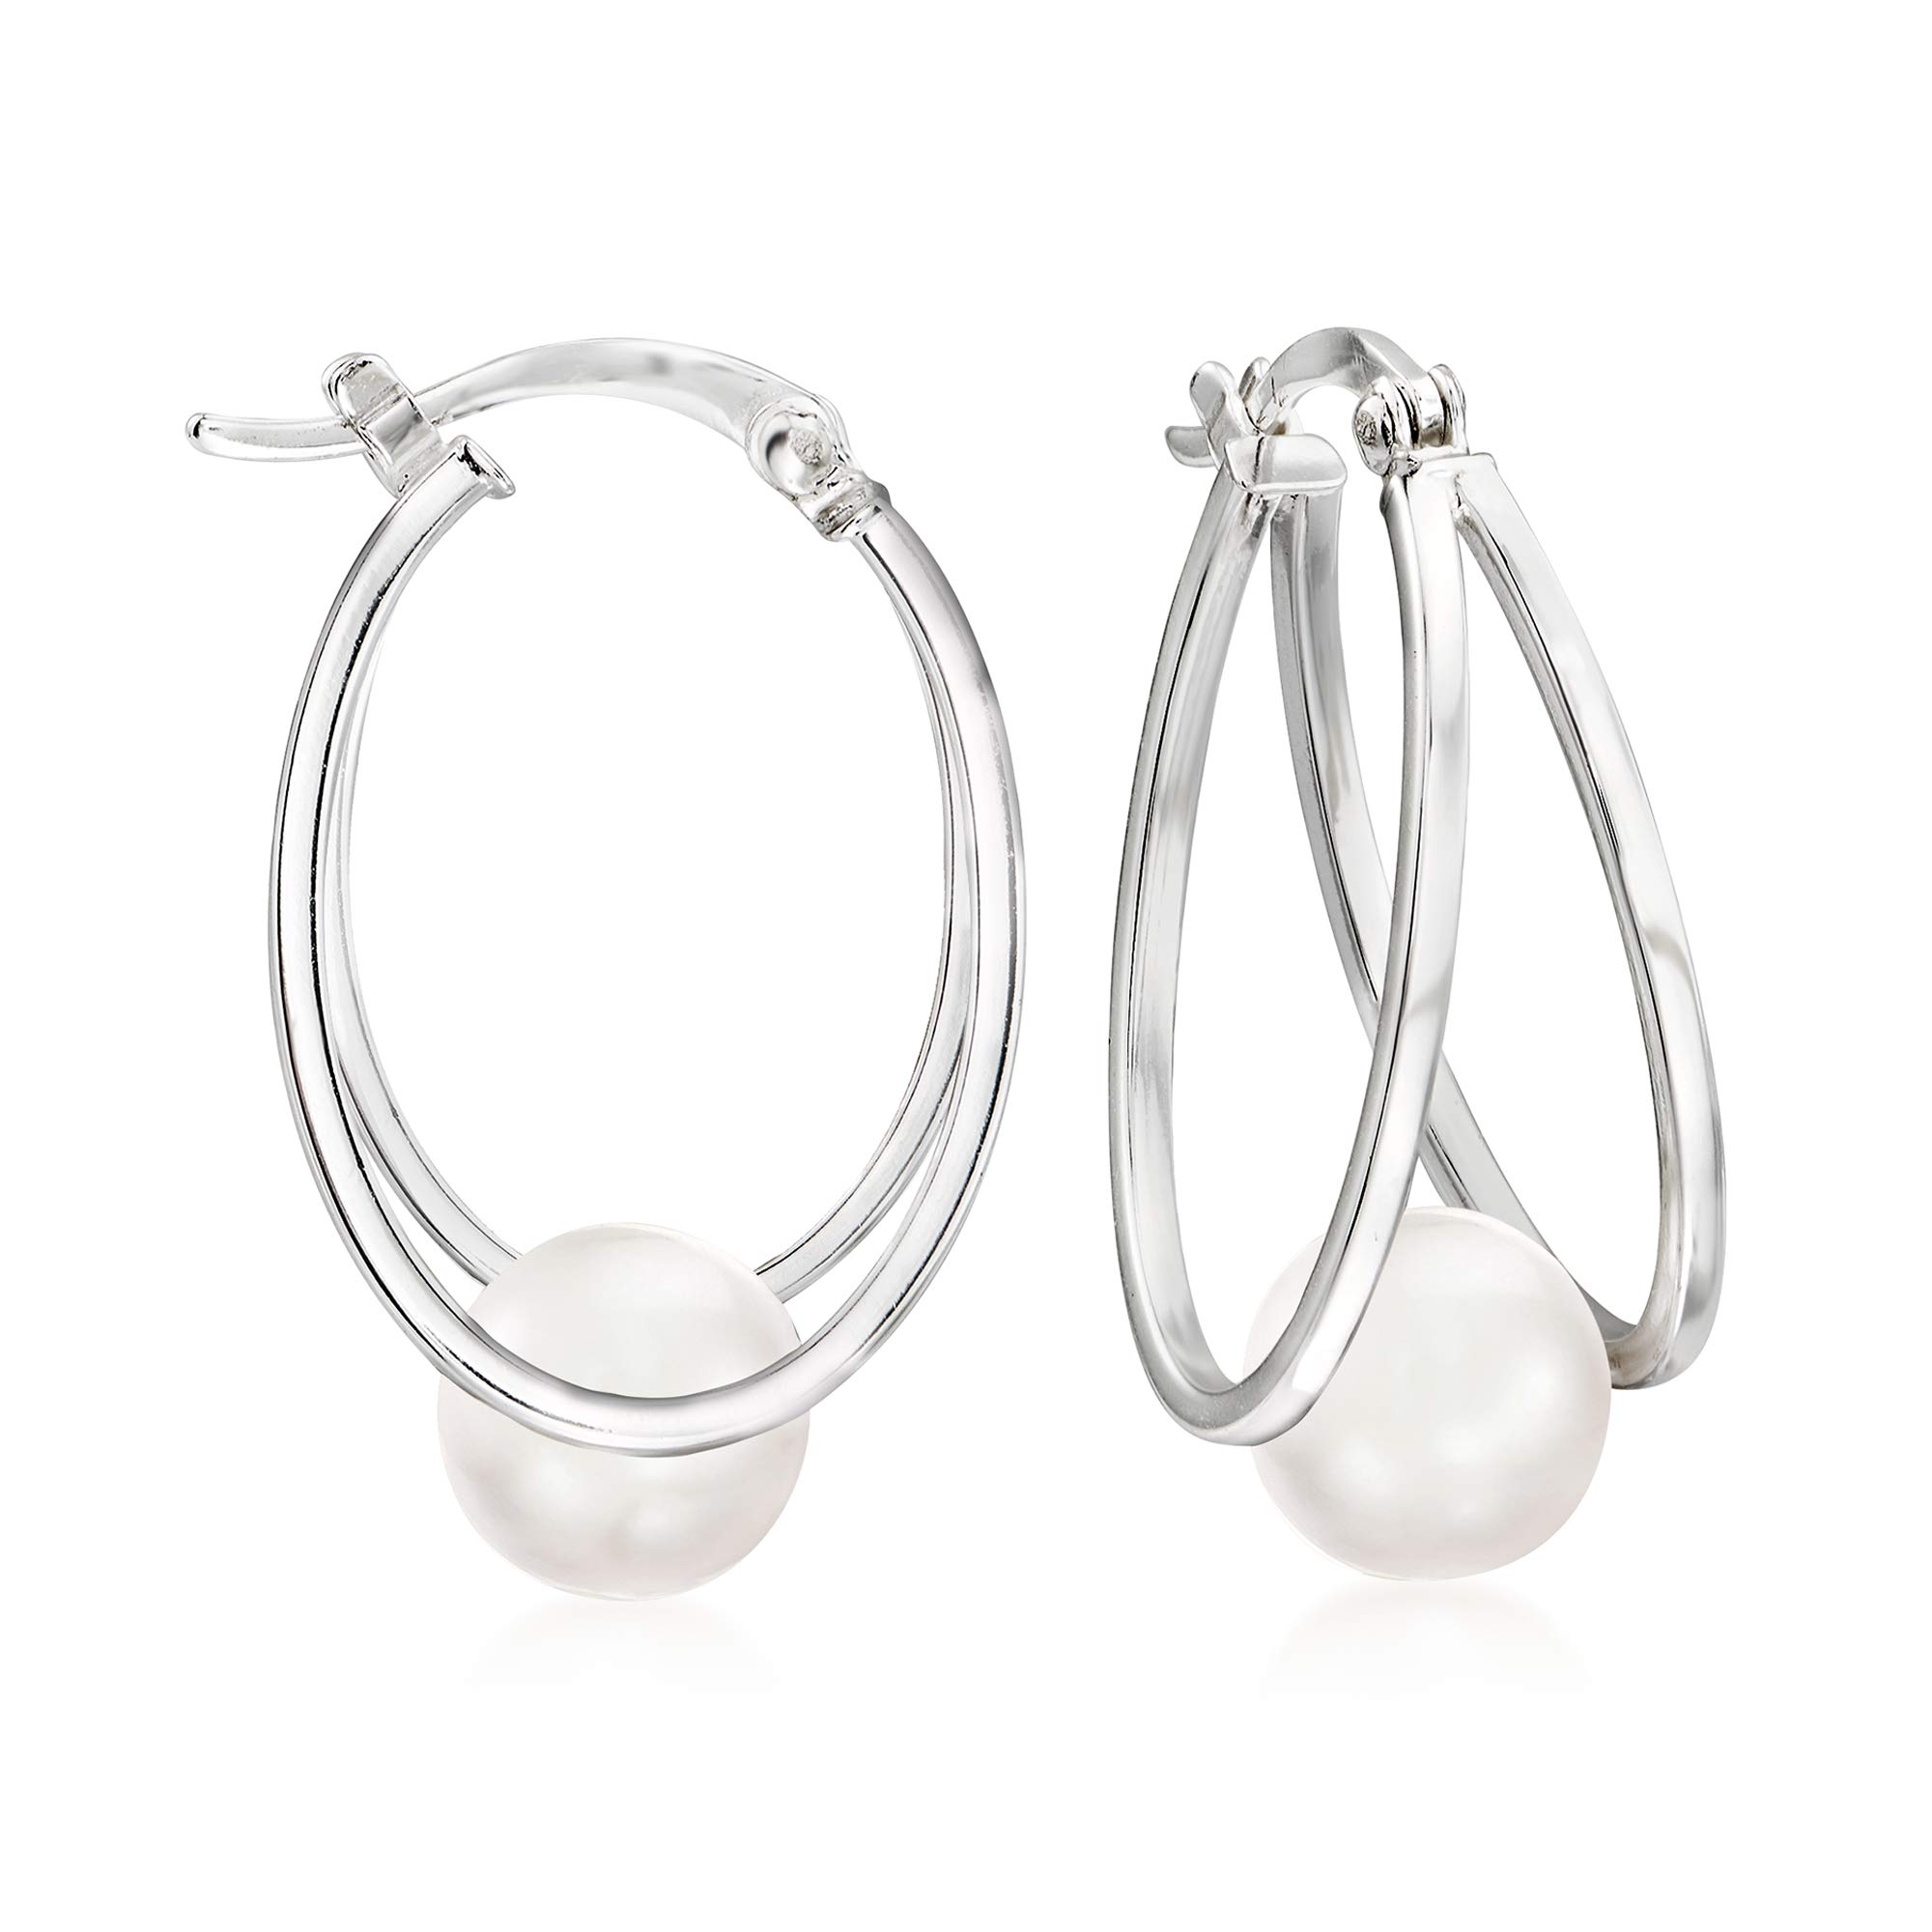 Ross-Simons Pearl Double Hoop Earrings in Sterling Silver